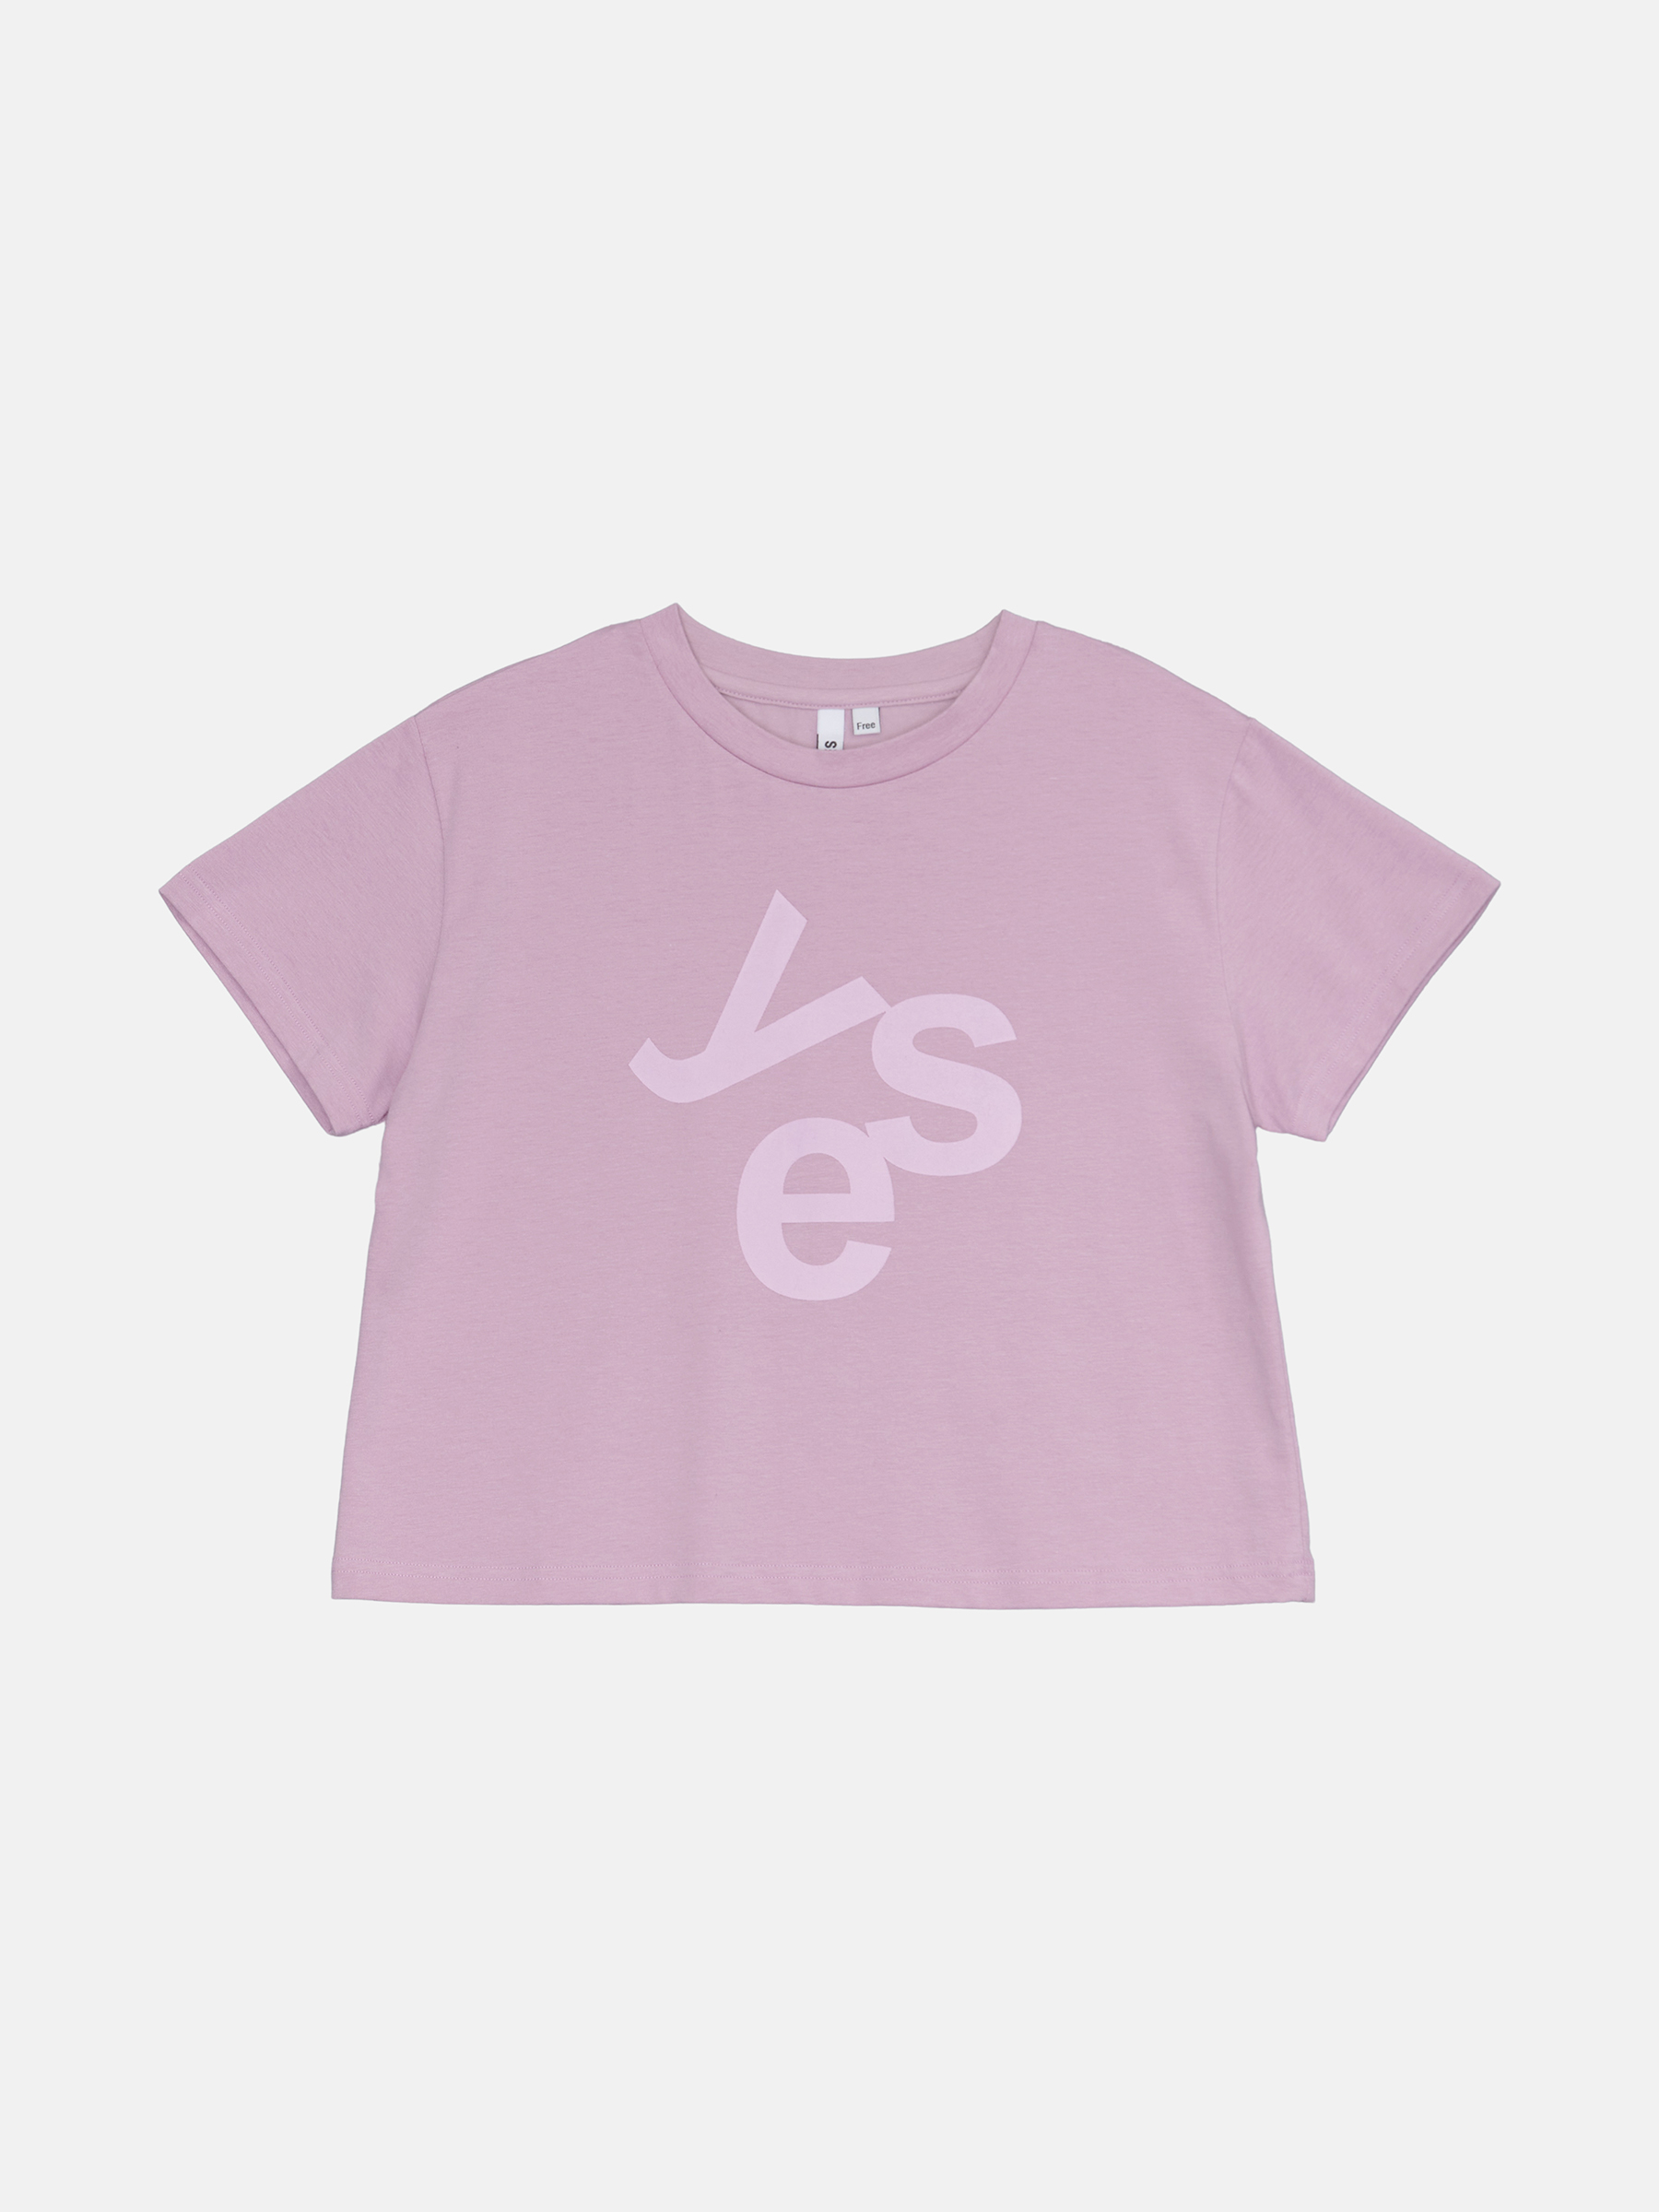 Yes 티셔츠 (Pink)